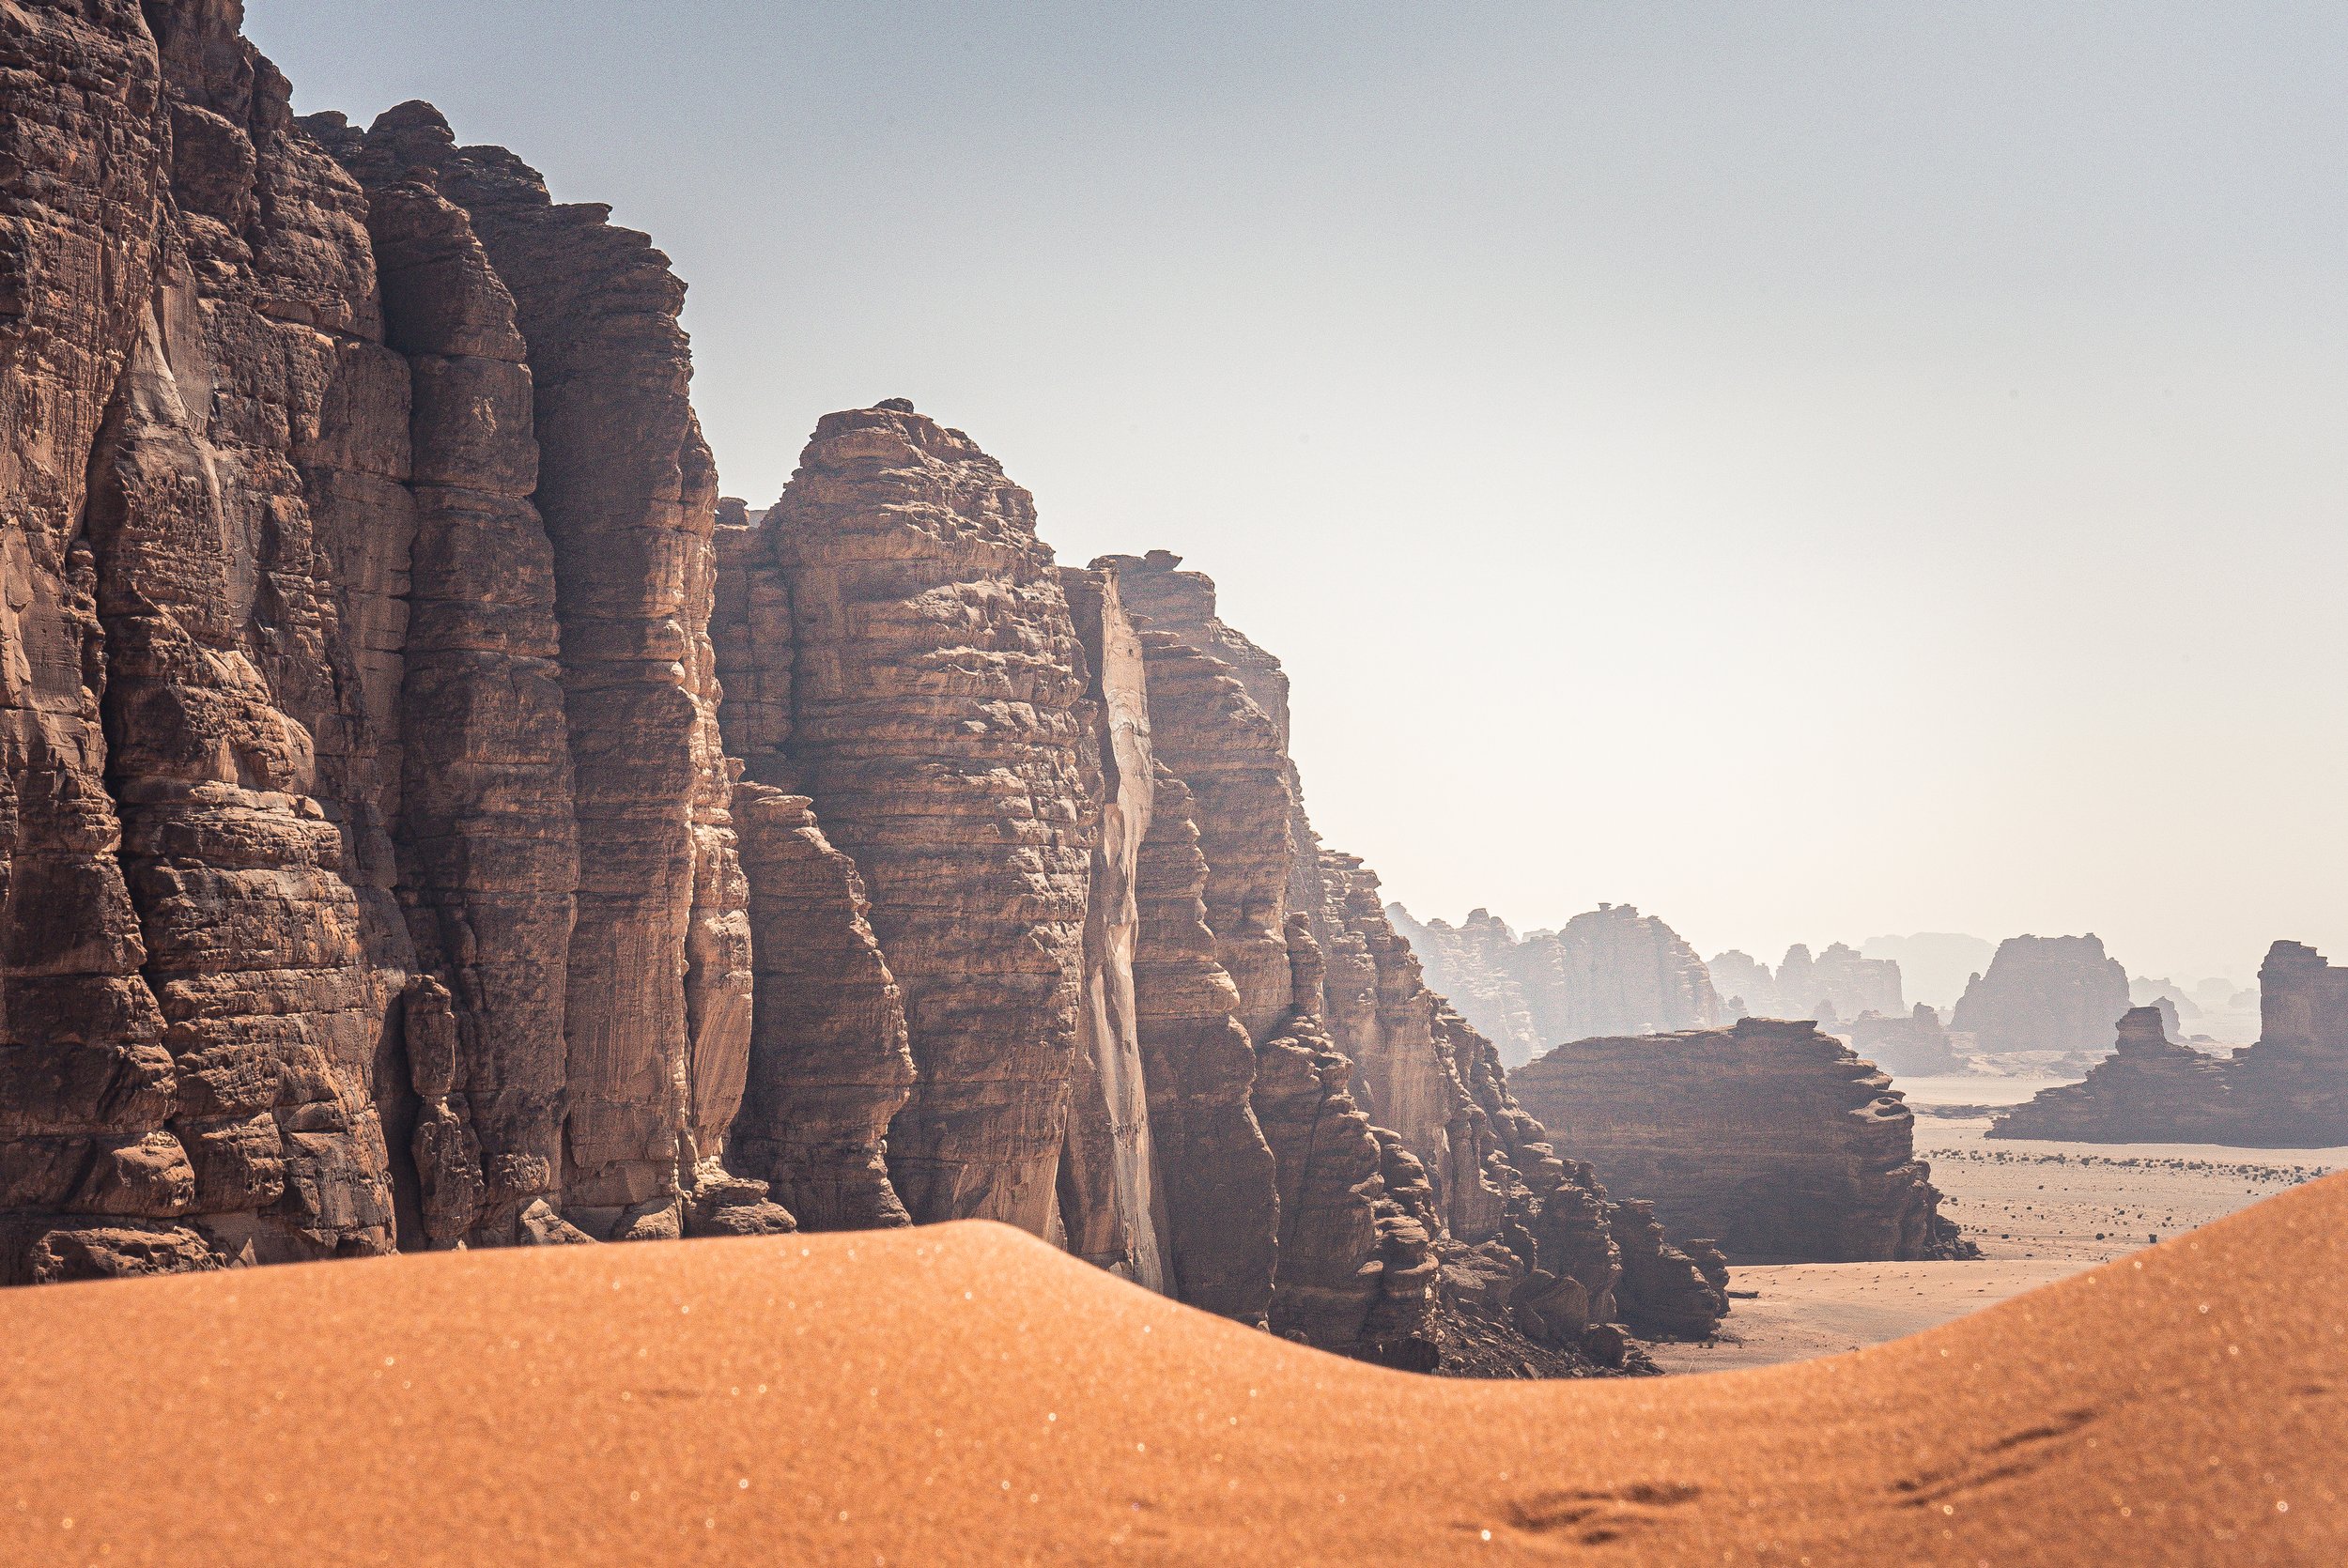 Saudi dunes 1.jpg